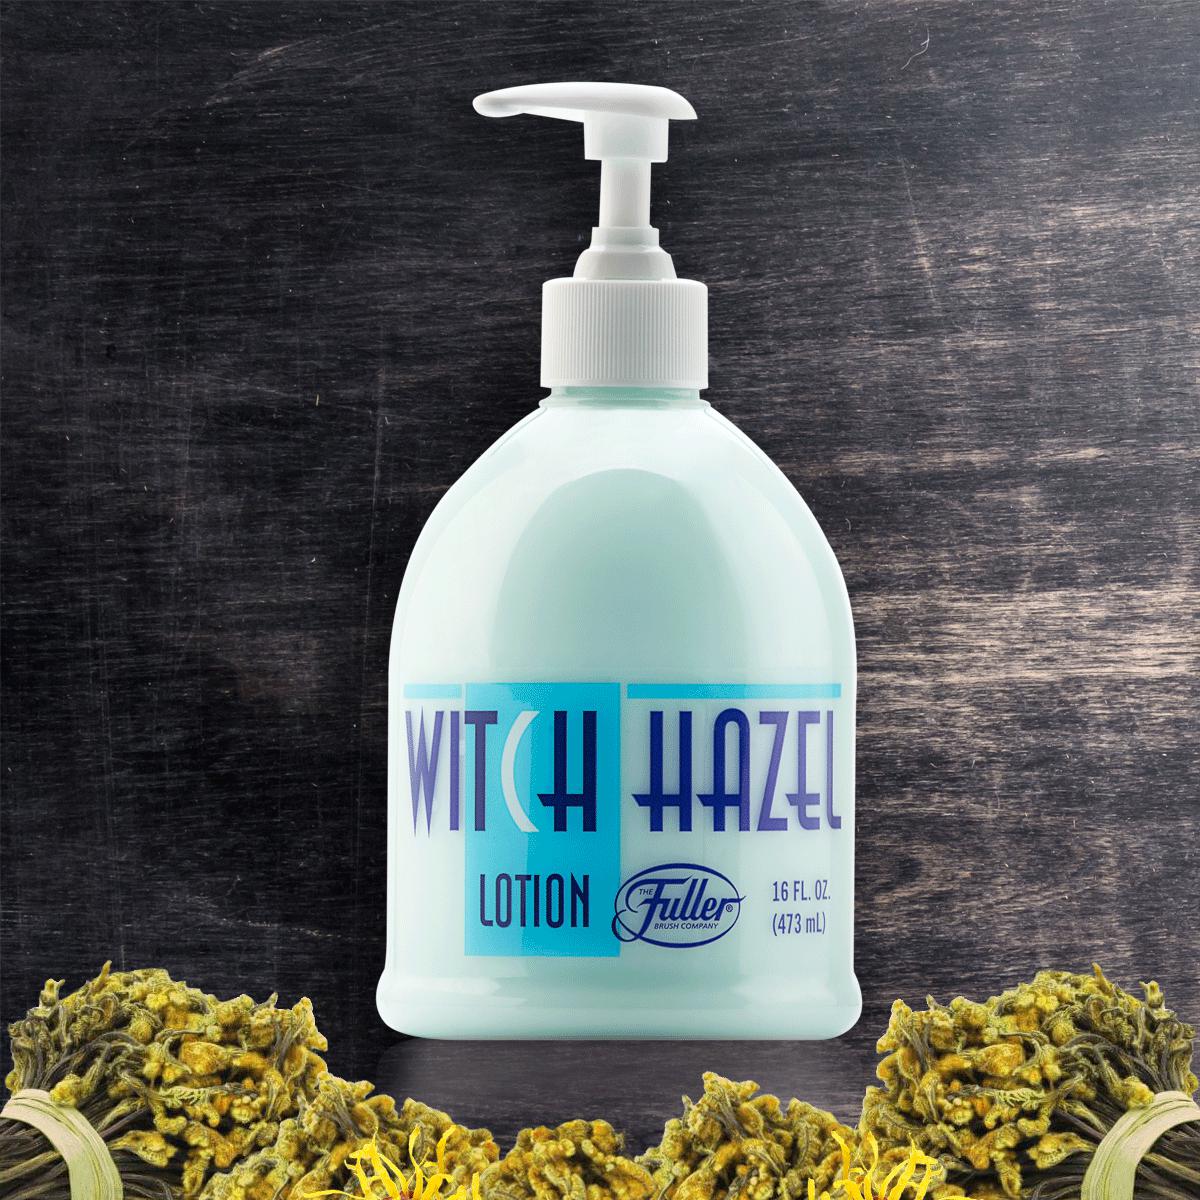 Witch Hazel Classic - Hidratante para manos secas con callosidades - Refrescante como una compañía de cepillos para después de afeitar.